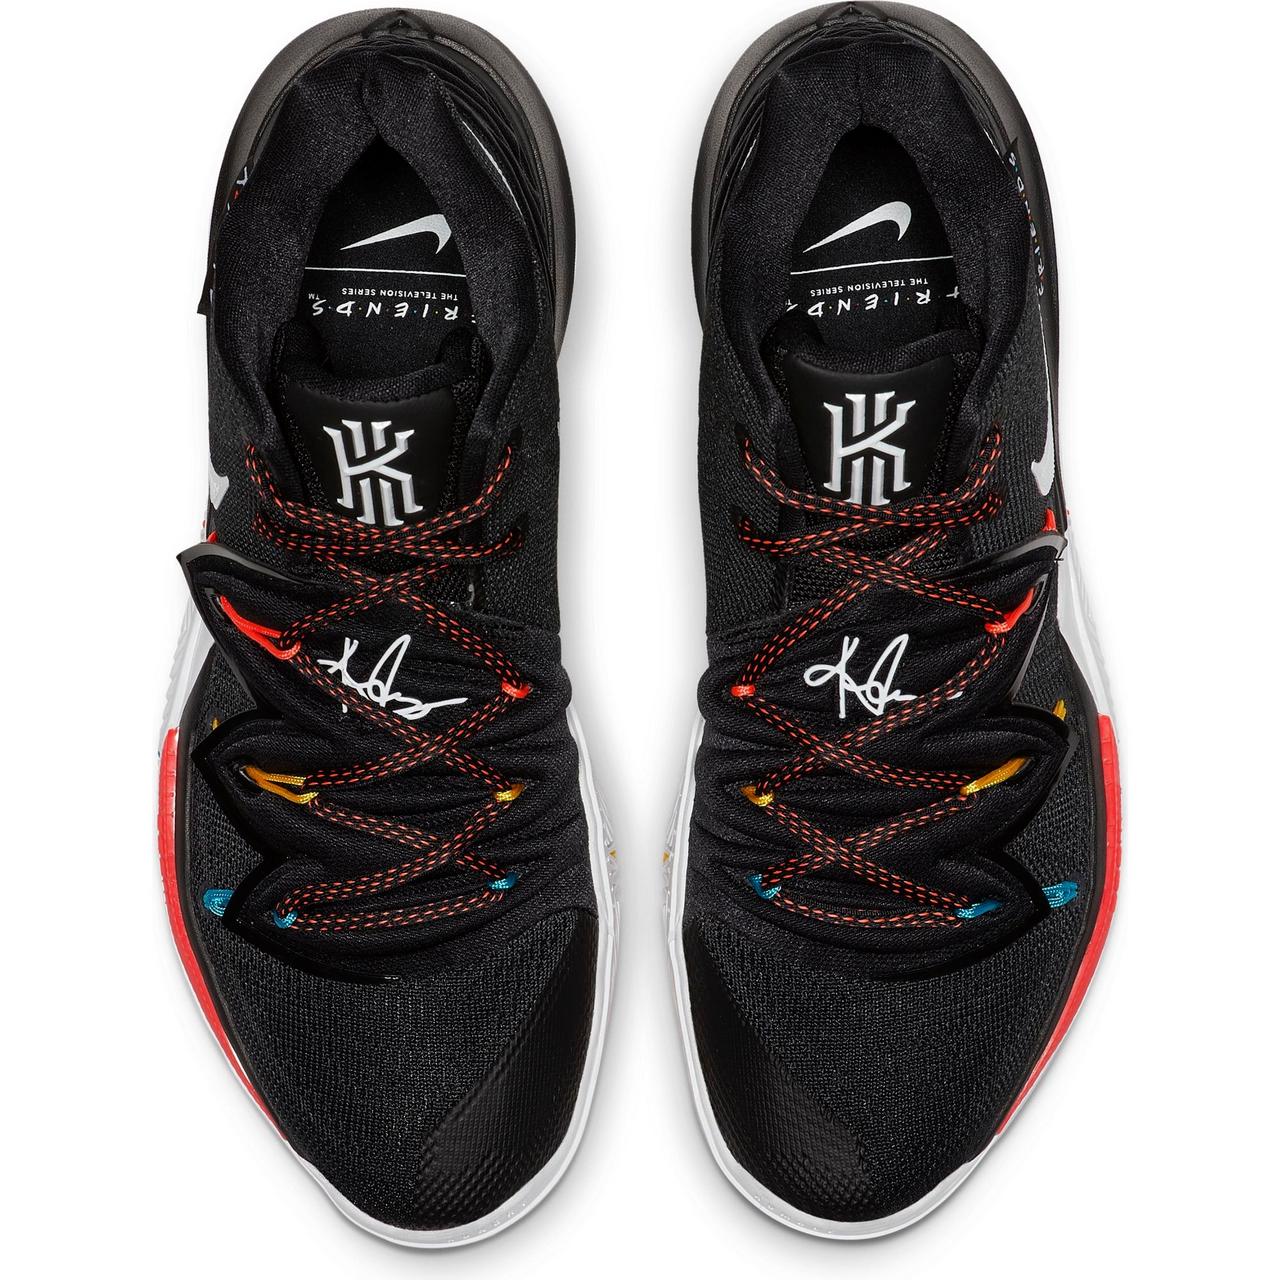 Sneaker Release: Nike Kyrie 5 “Black/Multicolor” Basketball Shoes